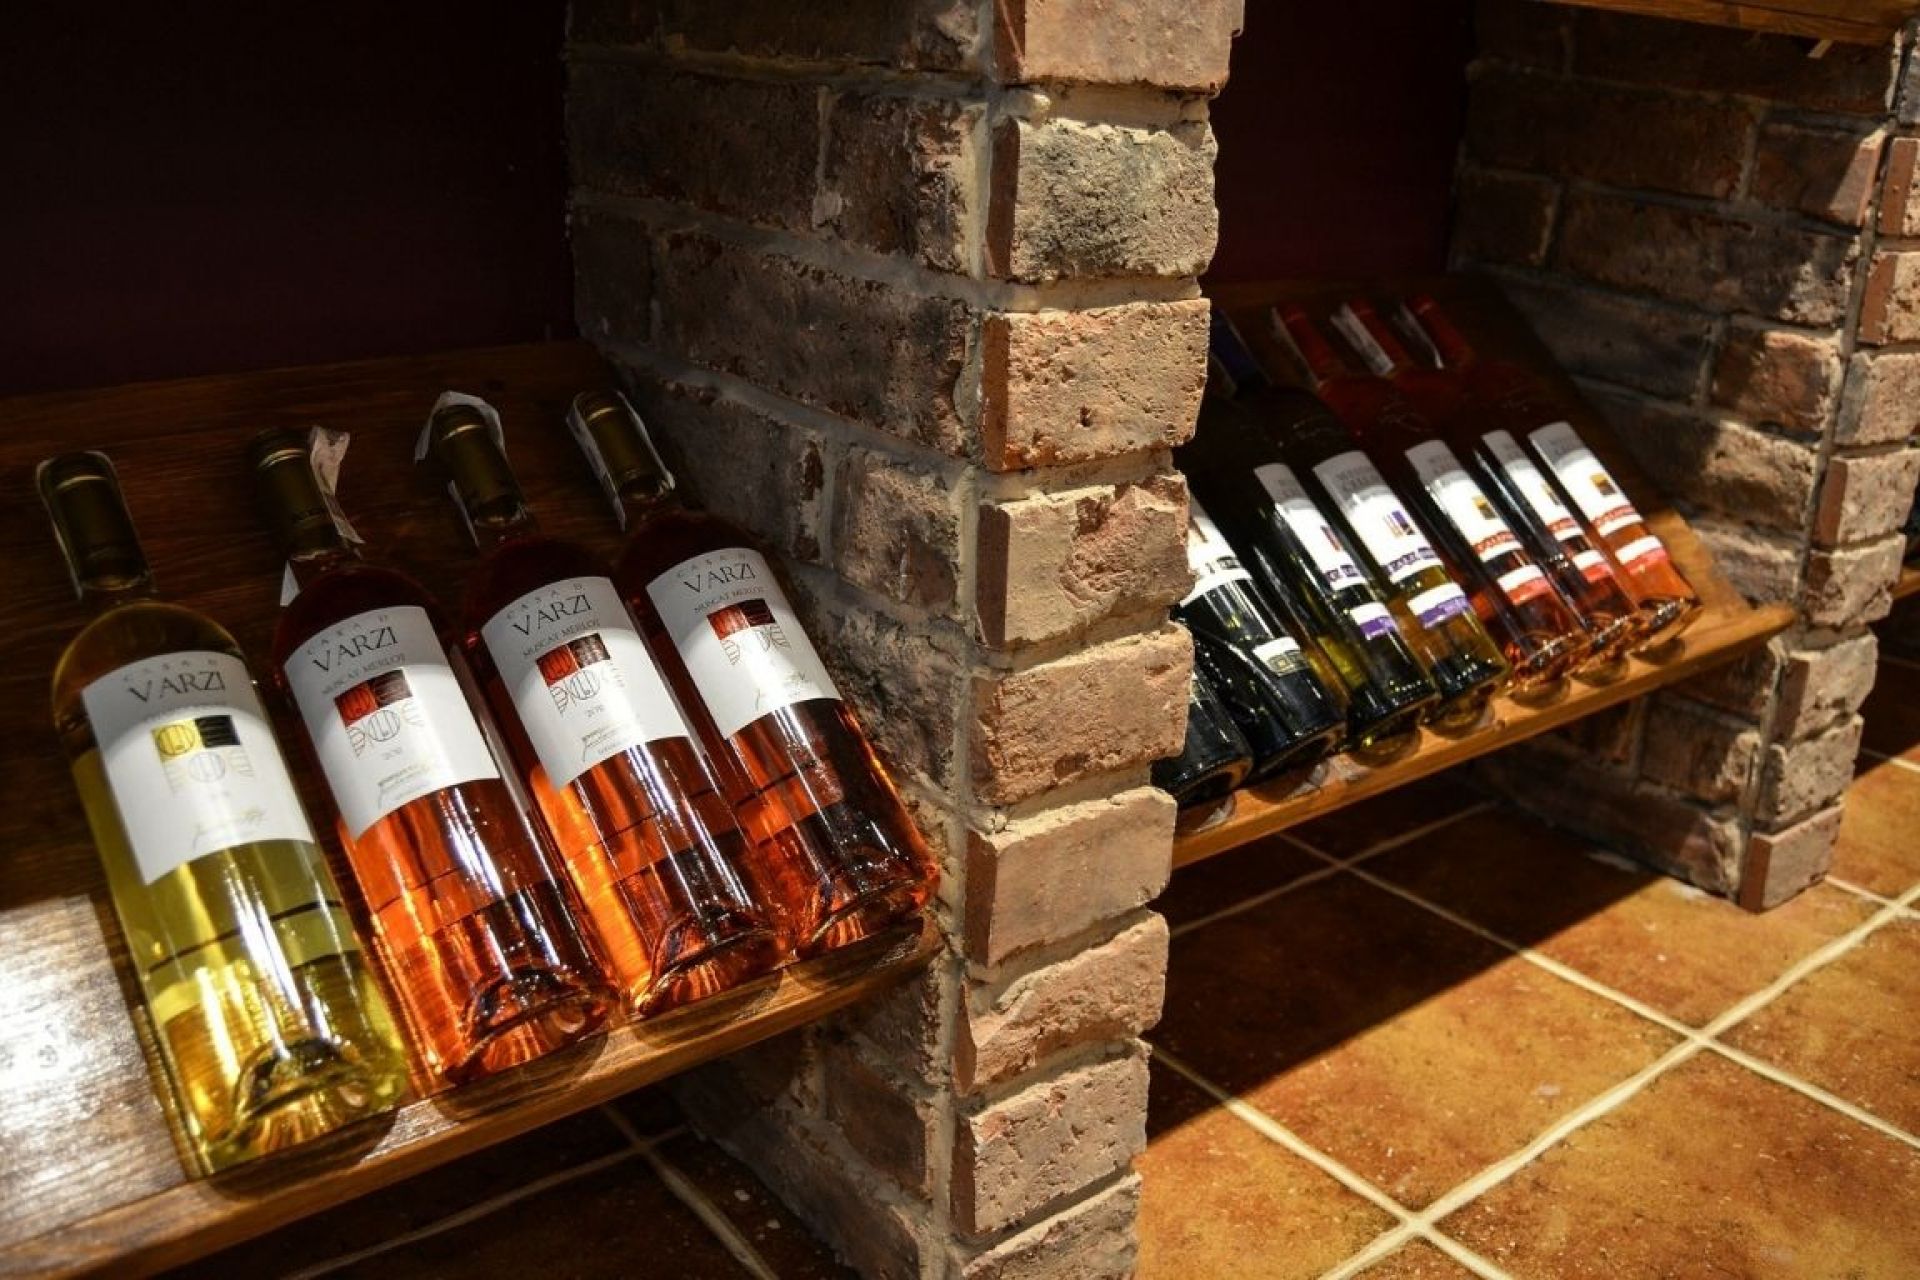 ② collection ; mini bouteilles d'alcool — Collections complètes